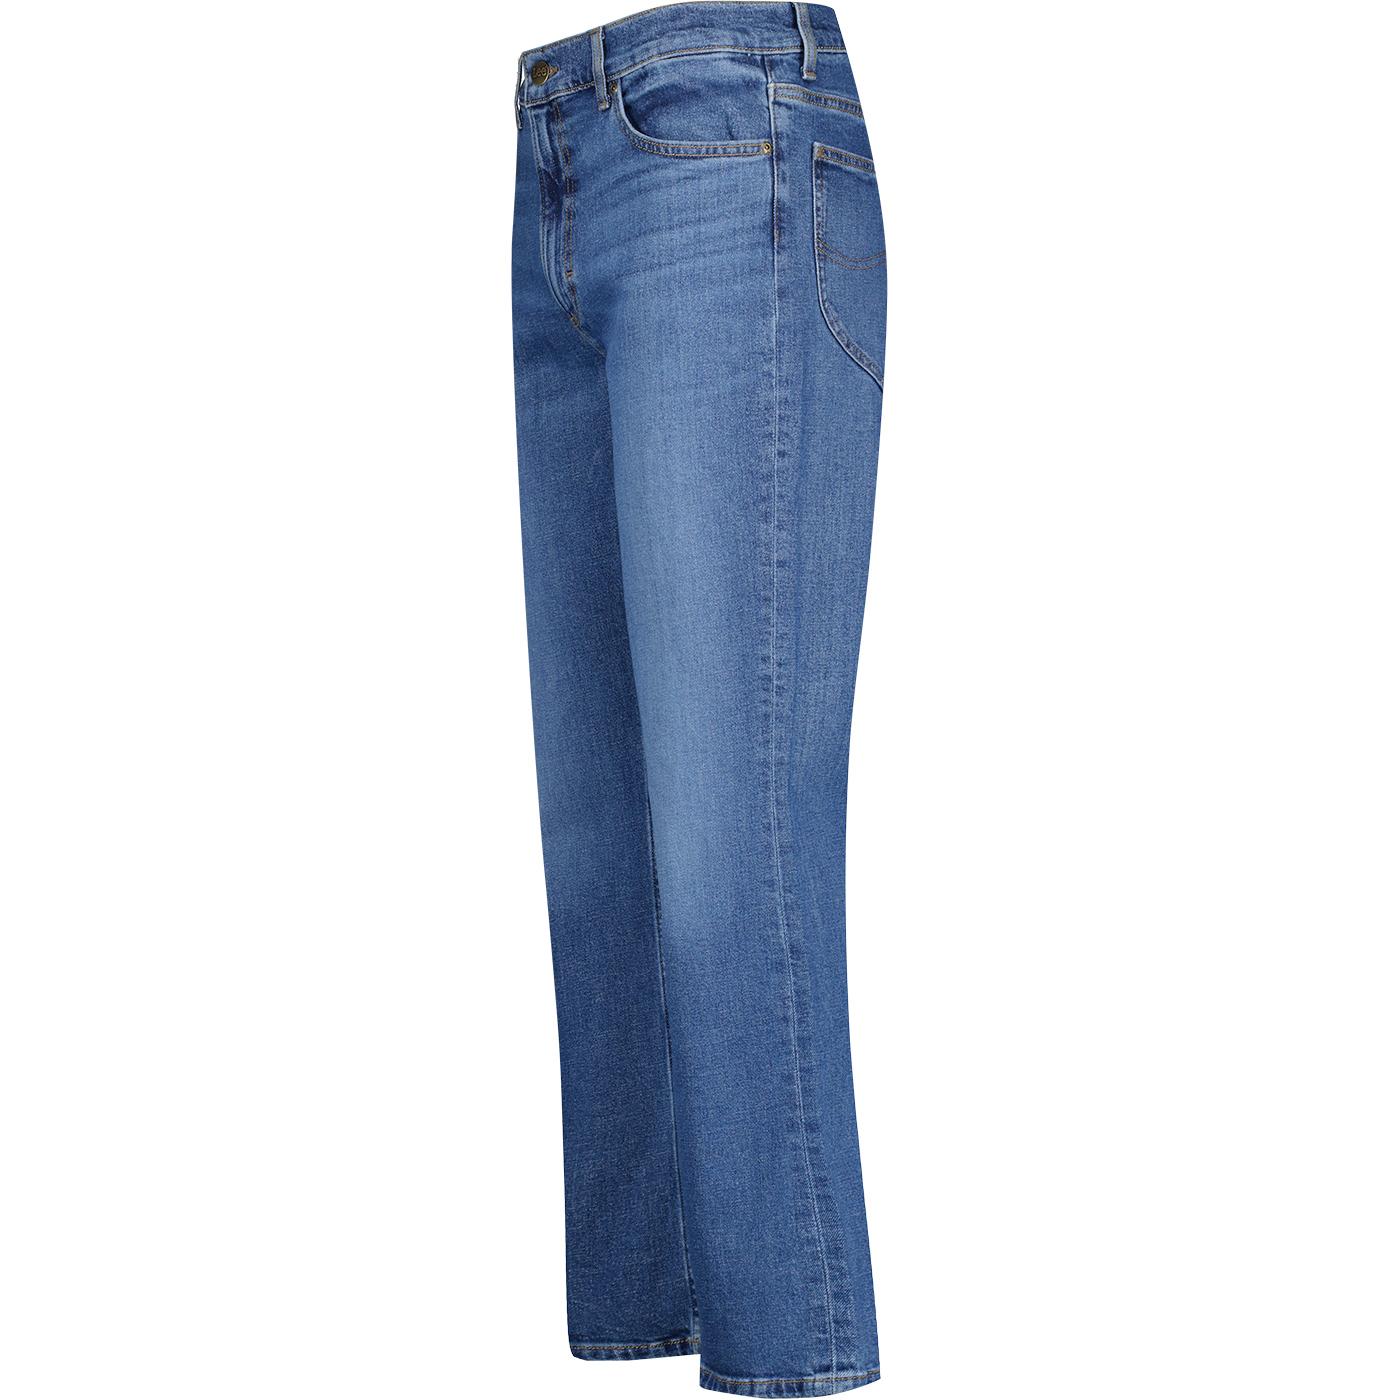 Vintage High Waisted Denim Jeans 70s Stonewash Wide Leg Pants